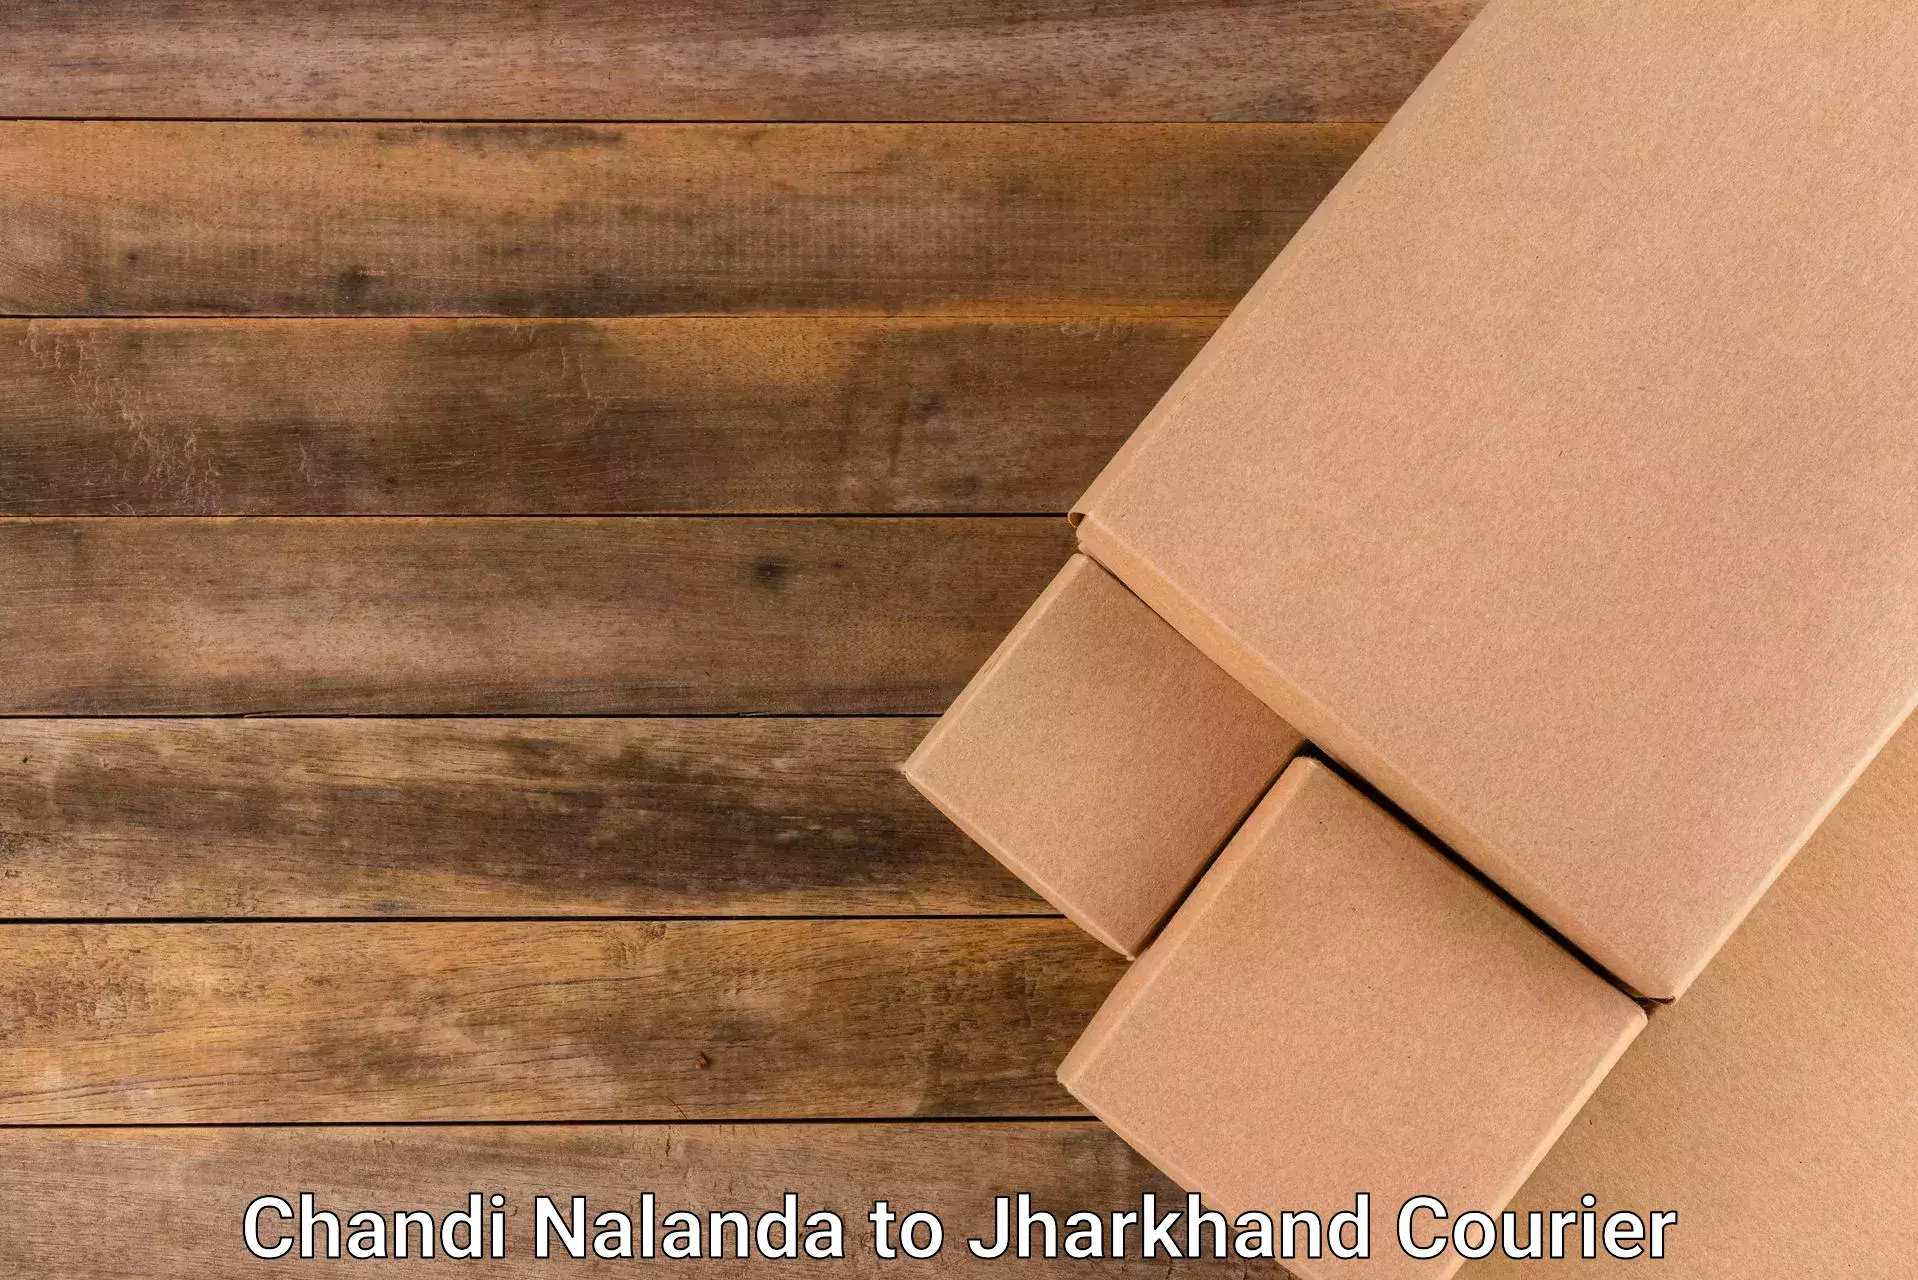 Courier service partnerships Chandi Nalanda to Jharkhand